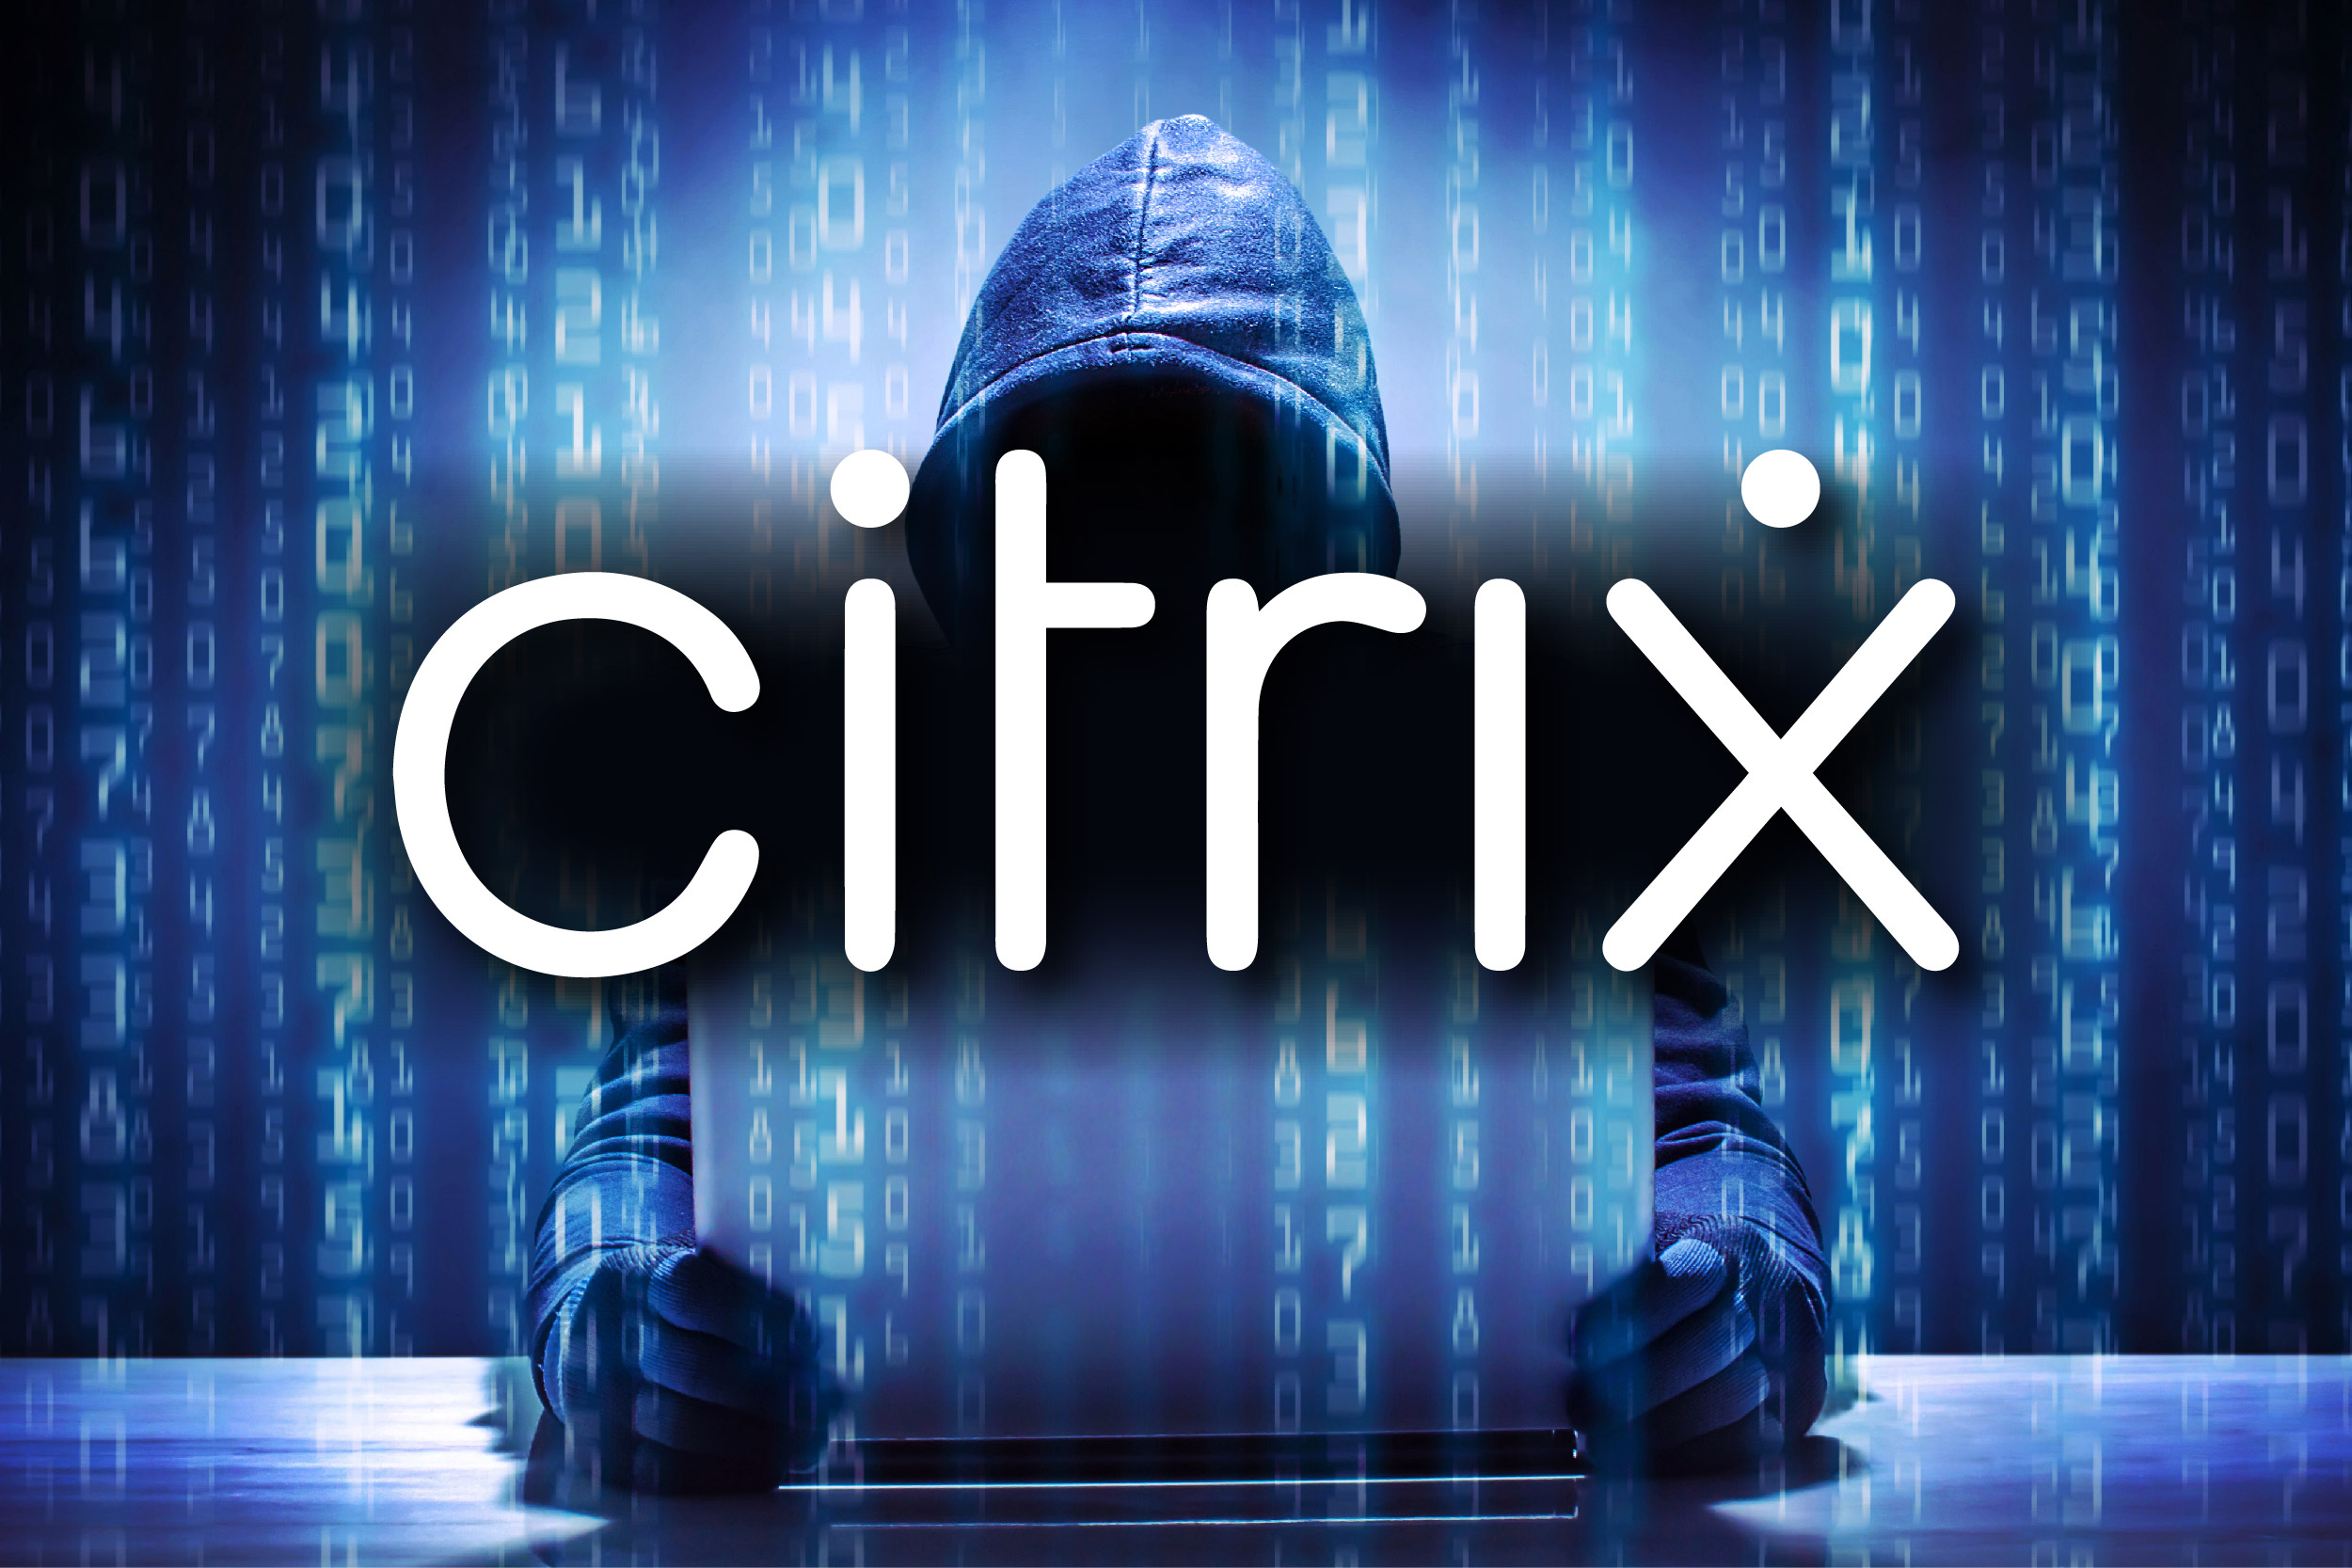 Critical Citrix NetScaler Vulnerabilities Exposes Sensitive Data